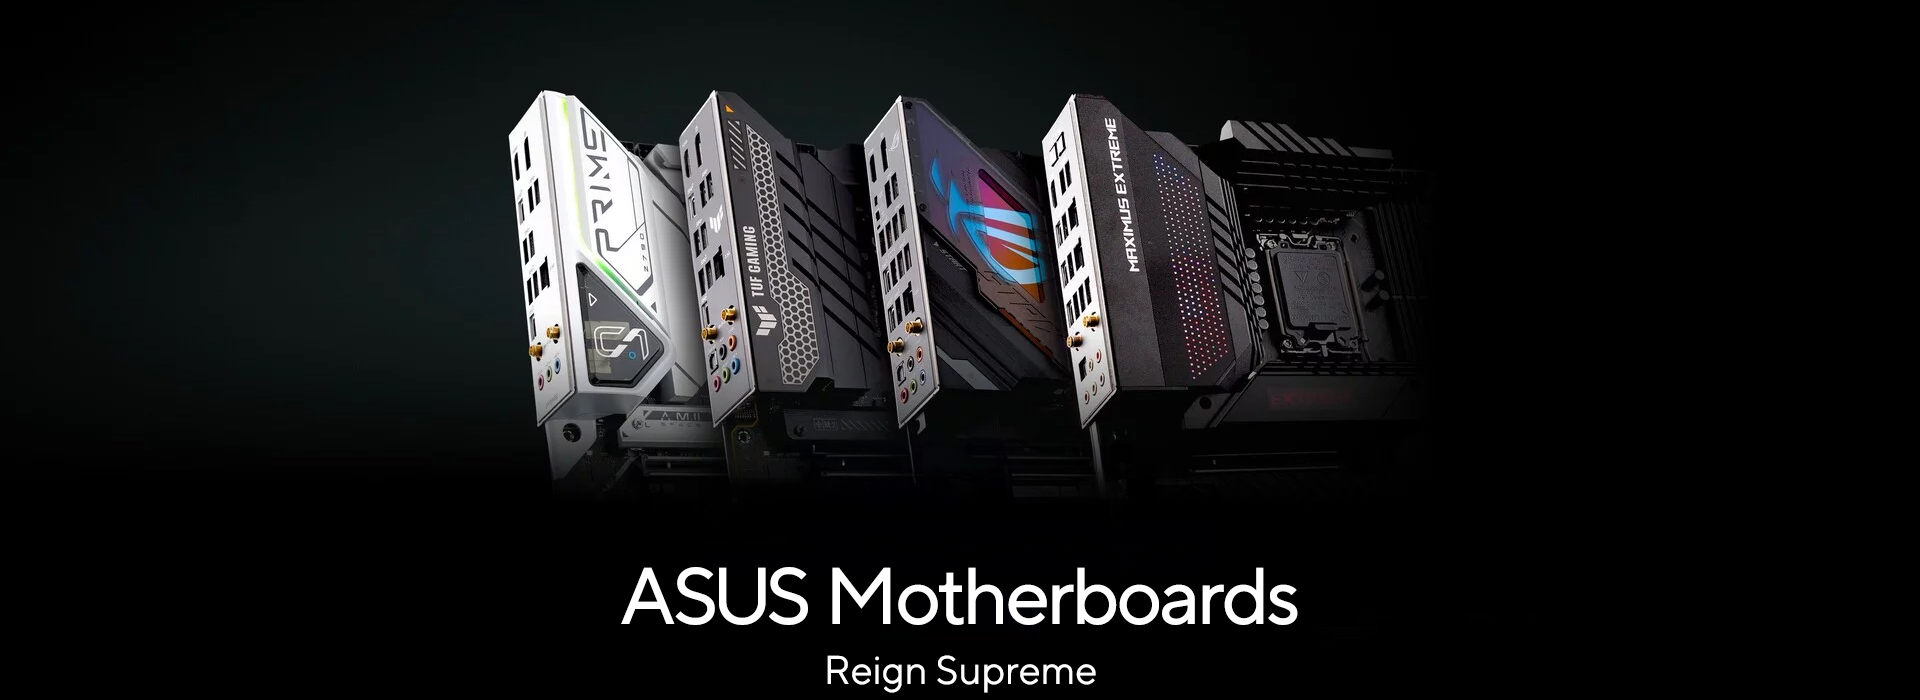 ASUS Motherboards Refresh 03.21.banner2